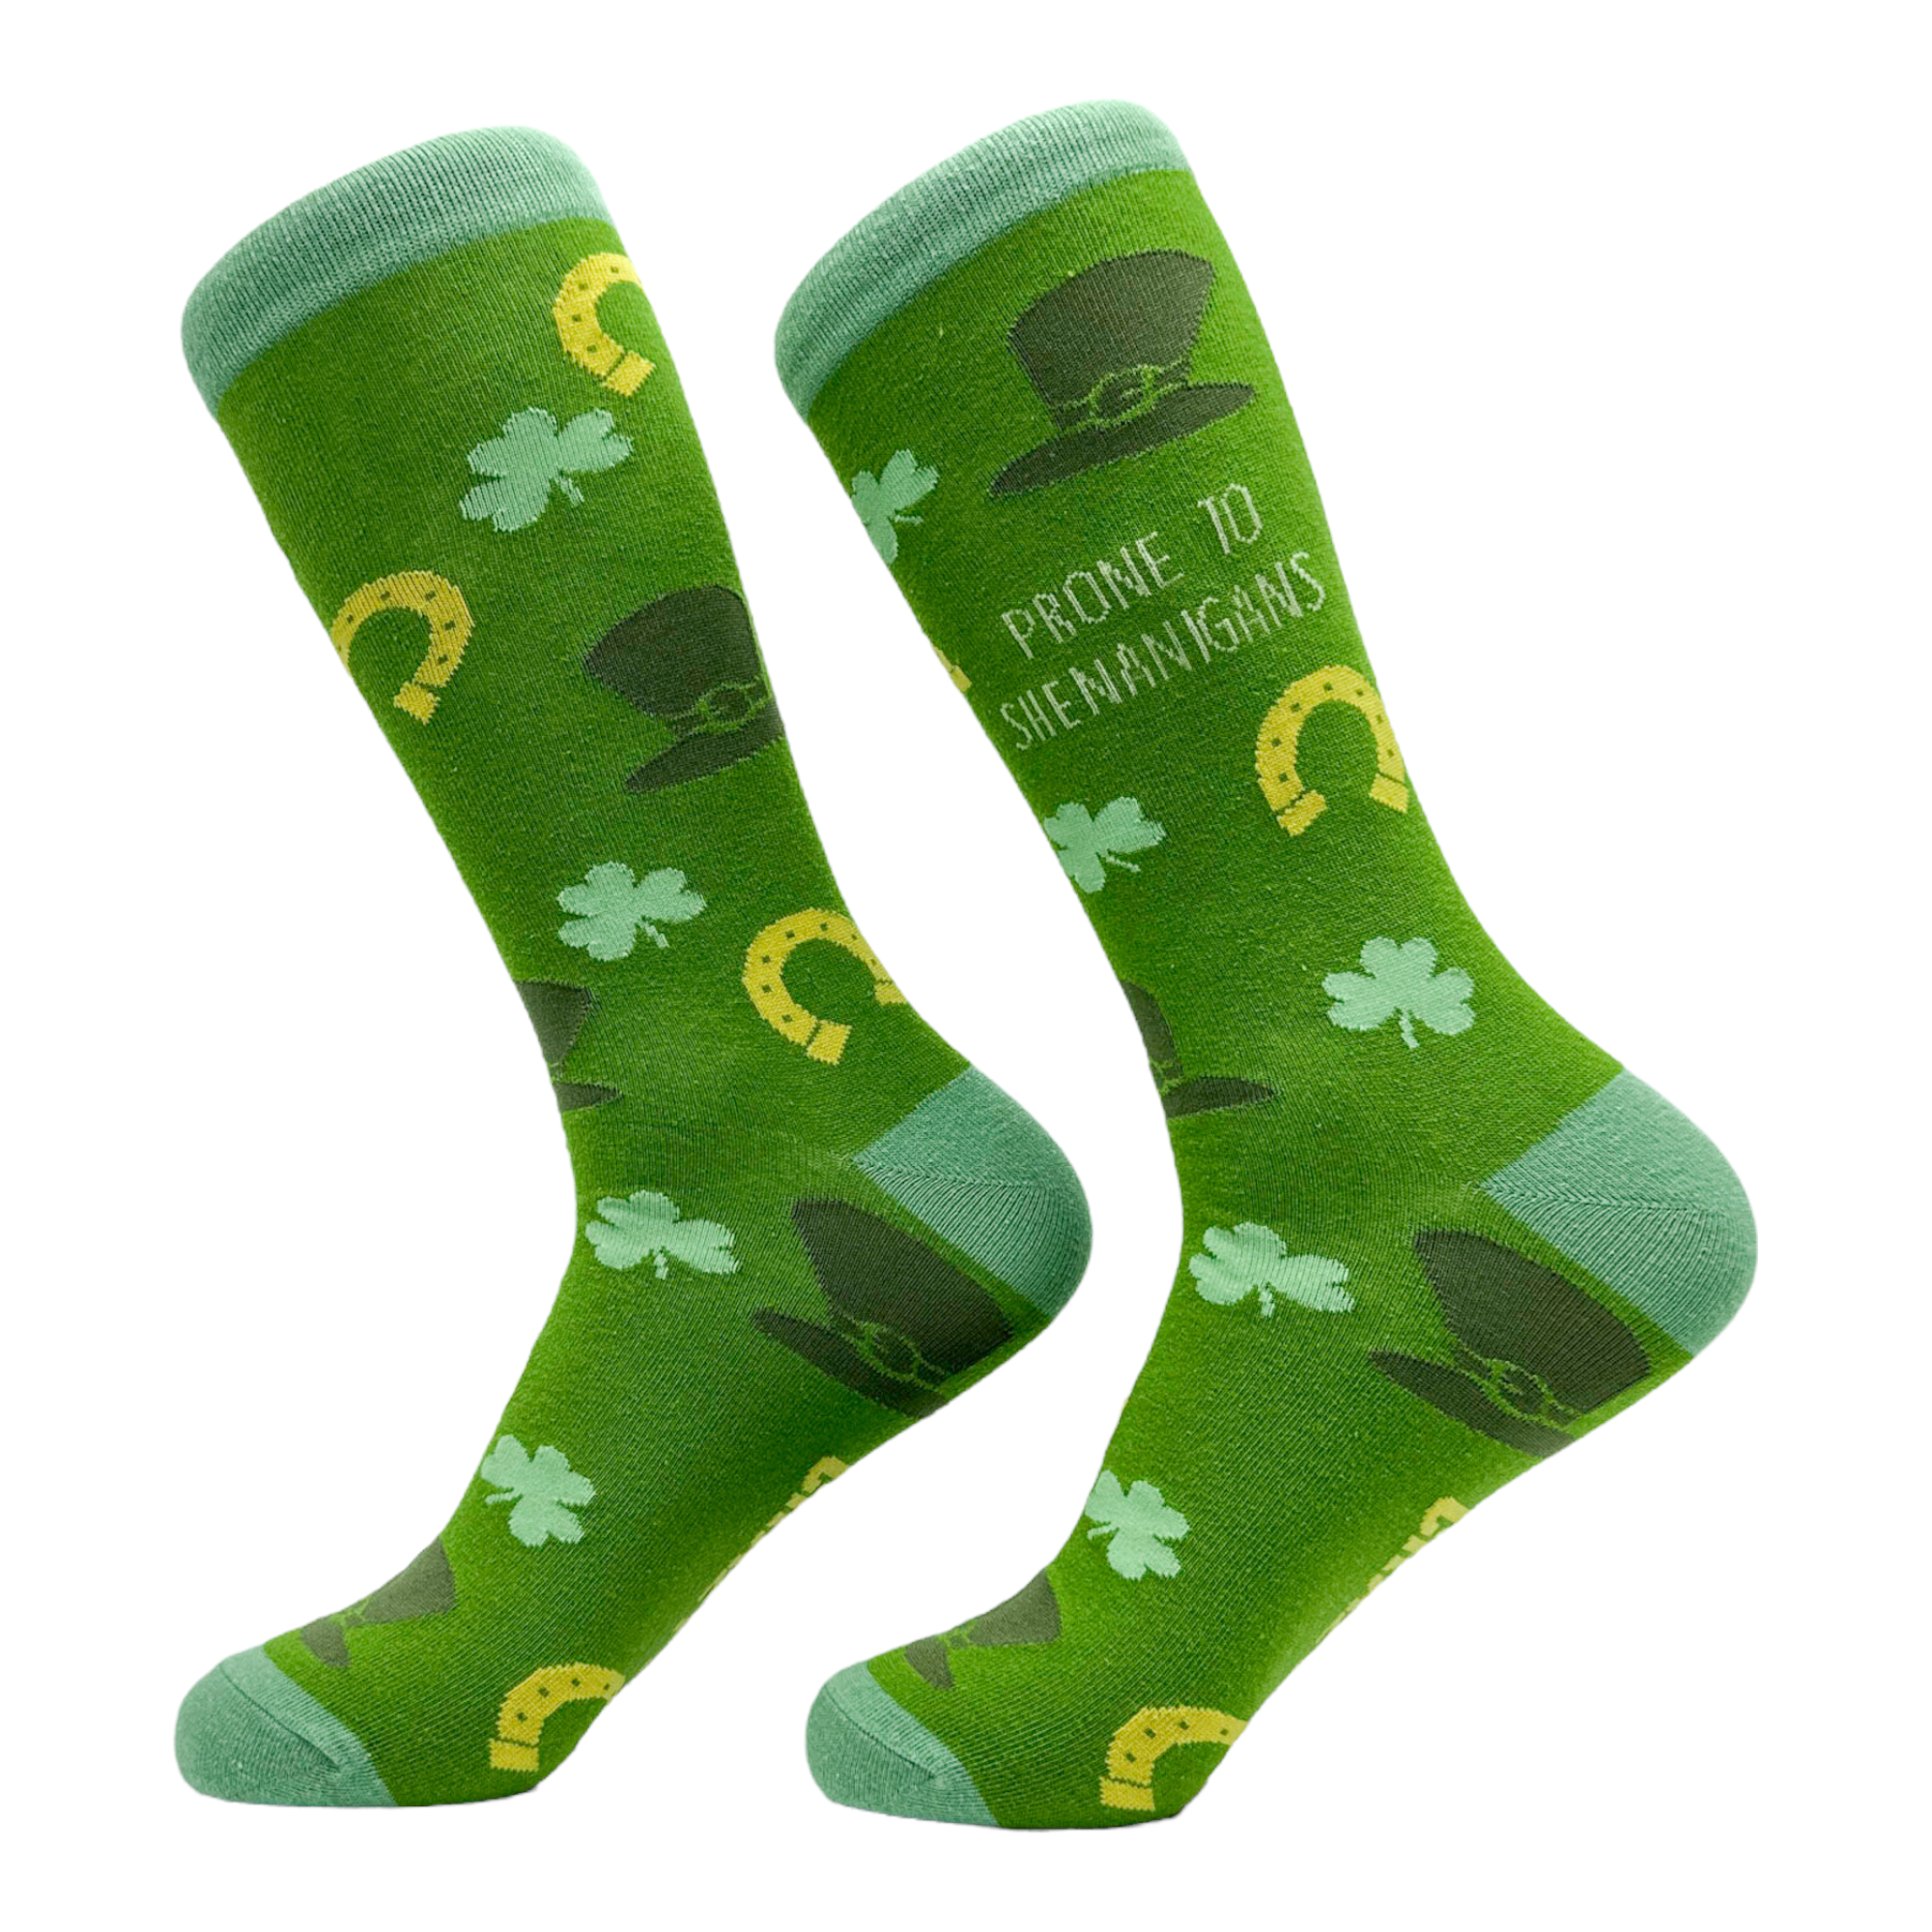 Funny Prone 2 Shenanigans Sock Nerdy Saint Patrick's Day Sarcastic Tee